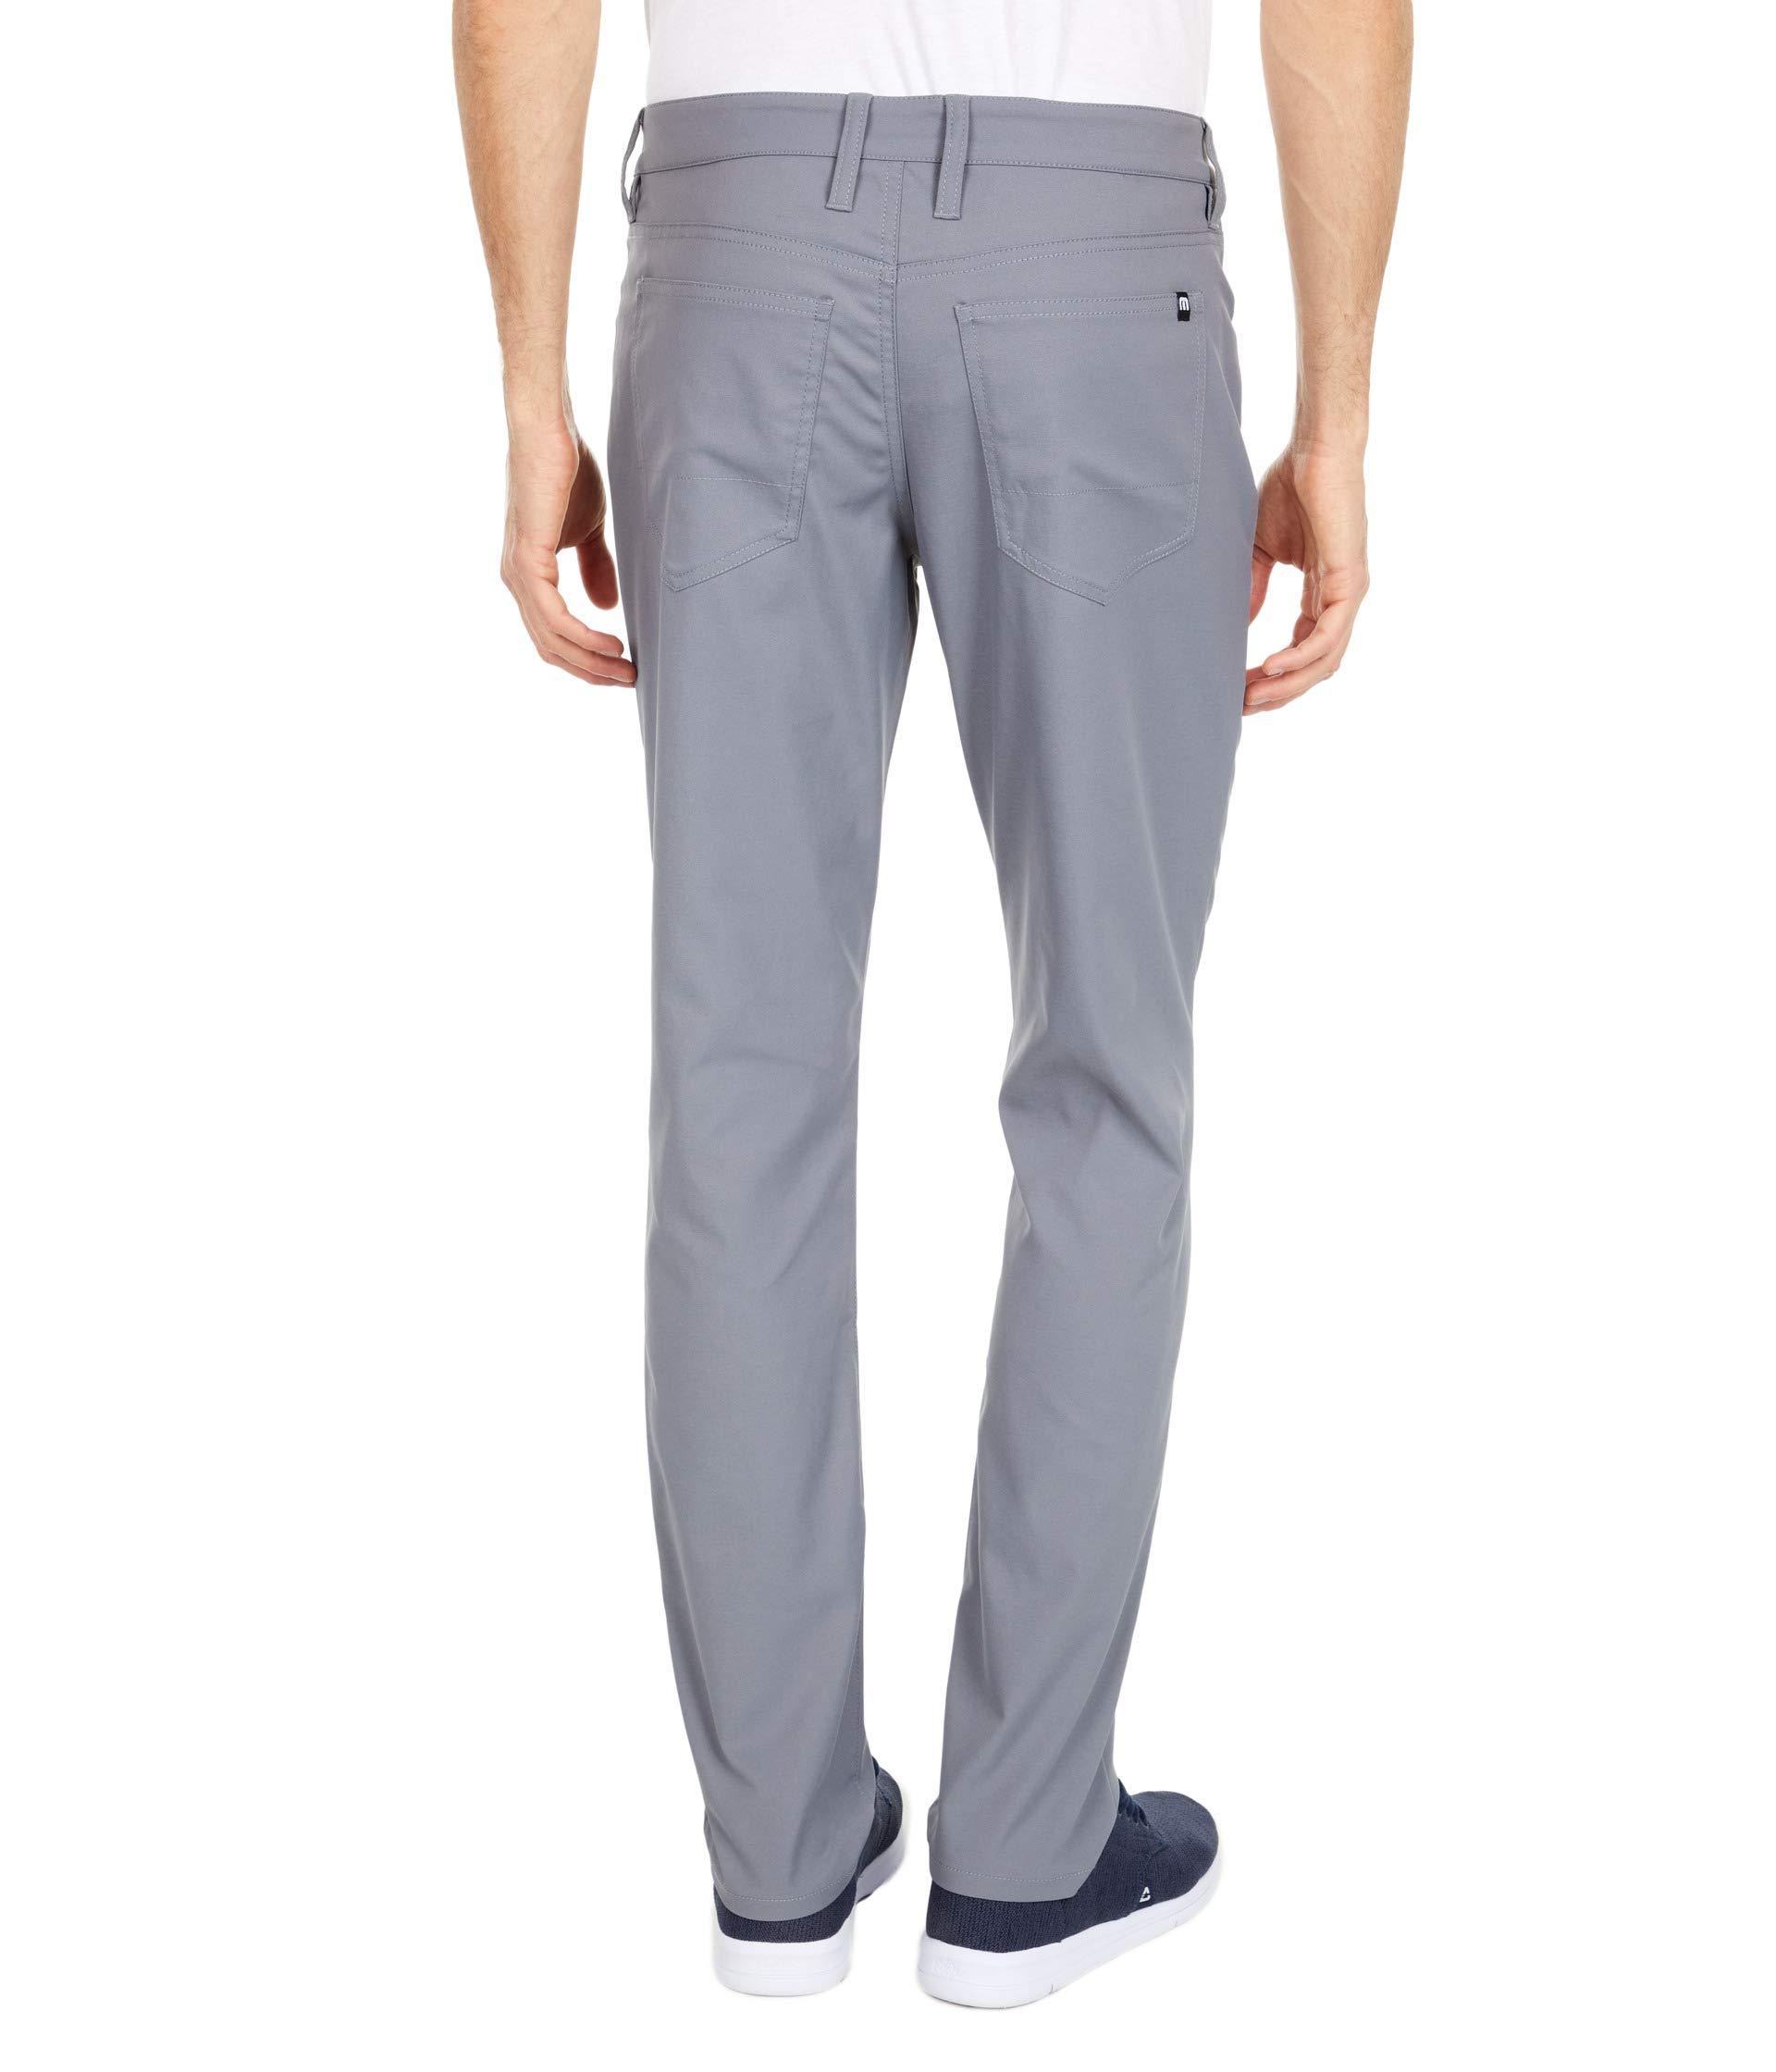 Travis Mathew Cotton Trifecta 2.0 Pants in Grey (Gray) for Men - Save ...